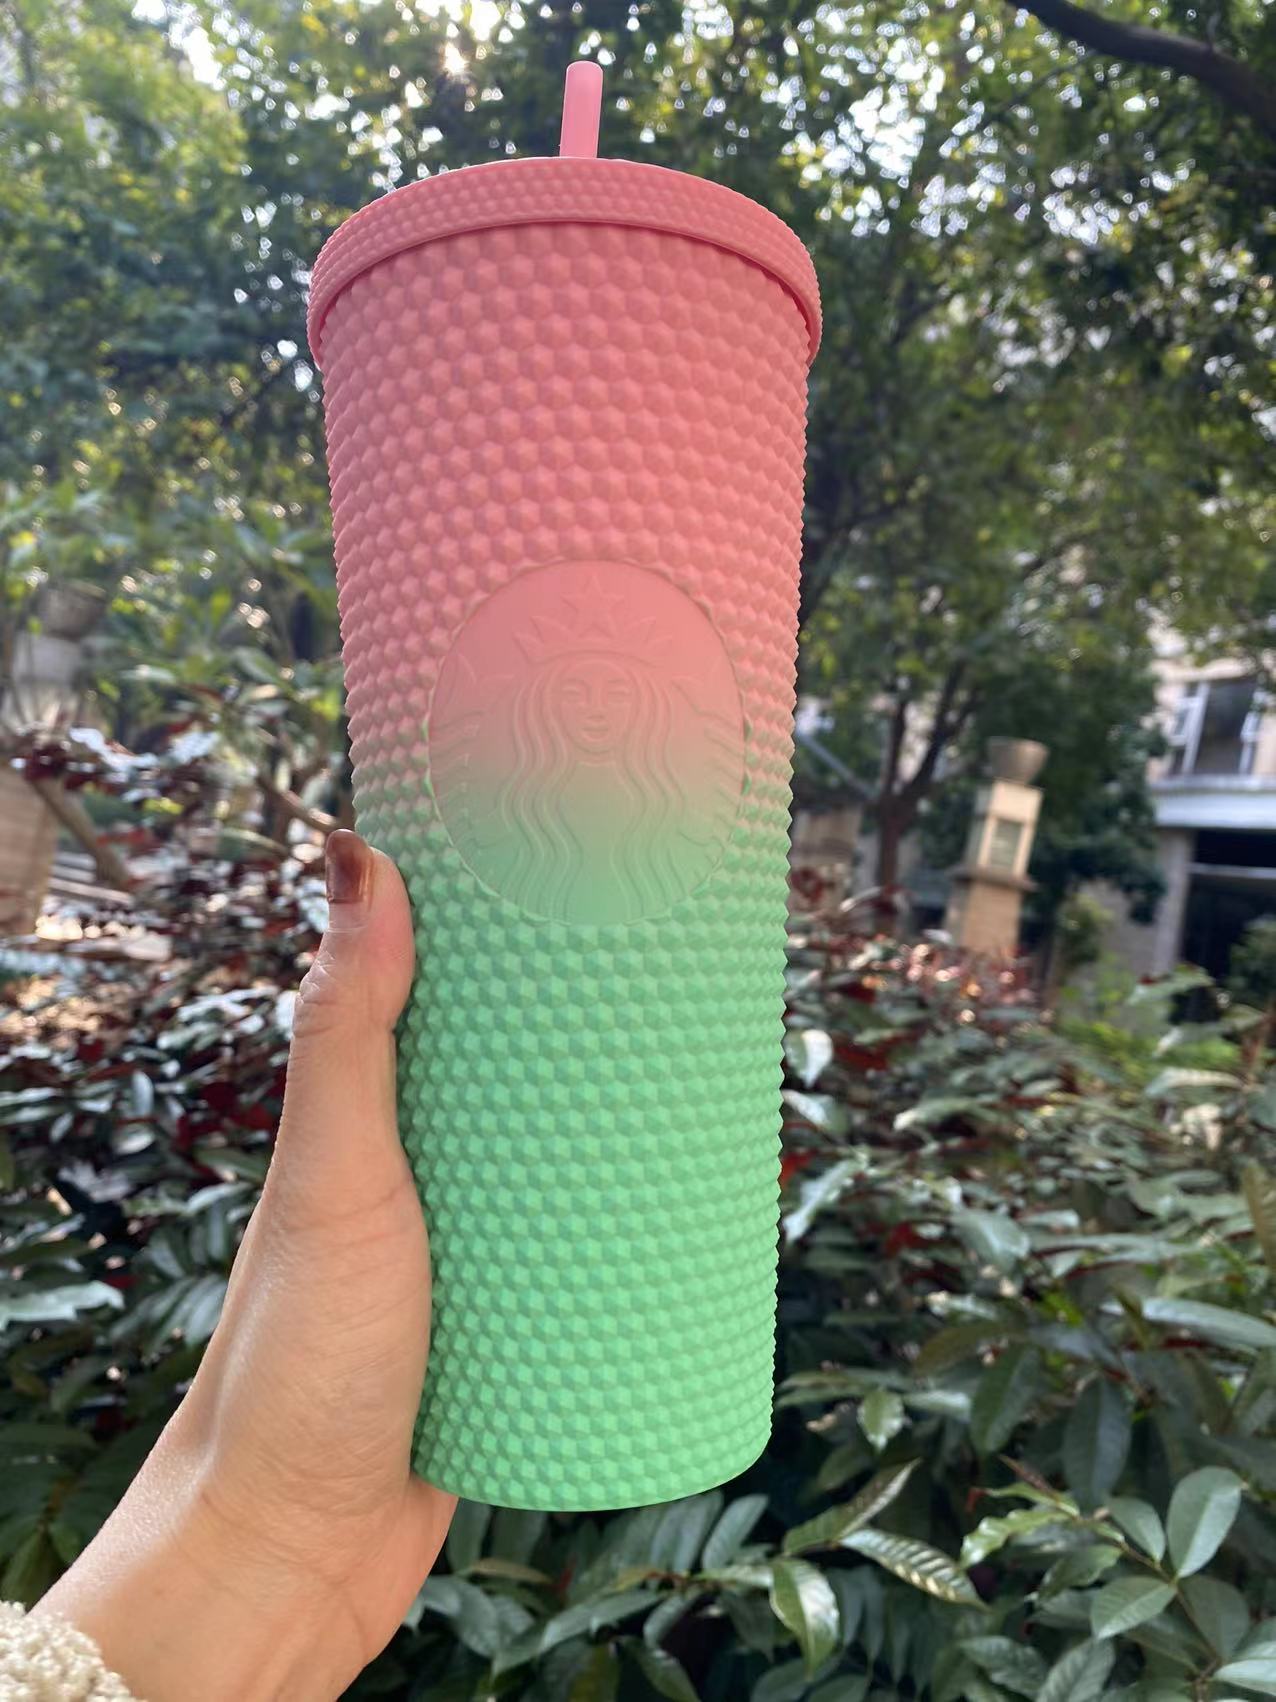 Starbucks Diamond STUDDED Shiny Sakura Pink Tumbler 24oz Straw Cup Milk  bottle